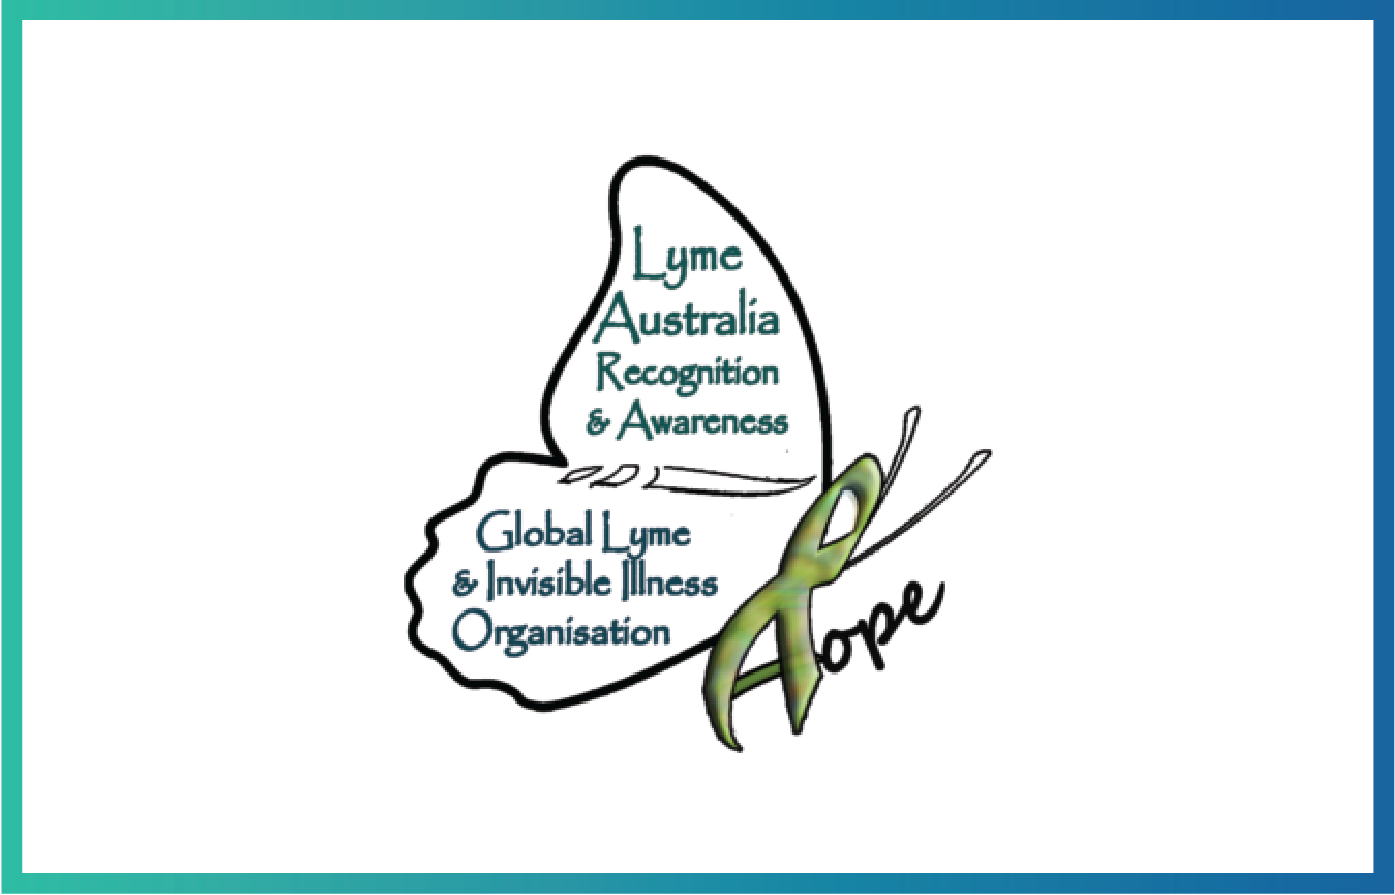 Lyme Australia Recognition & Awareness | Global Lyme & Invisible Organisation Logo